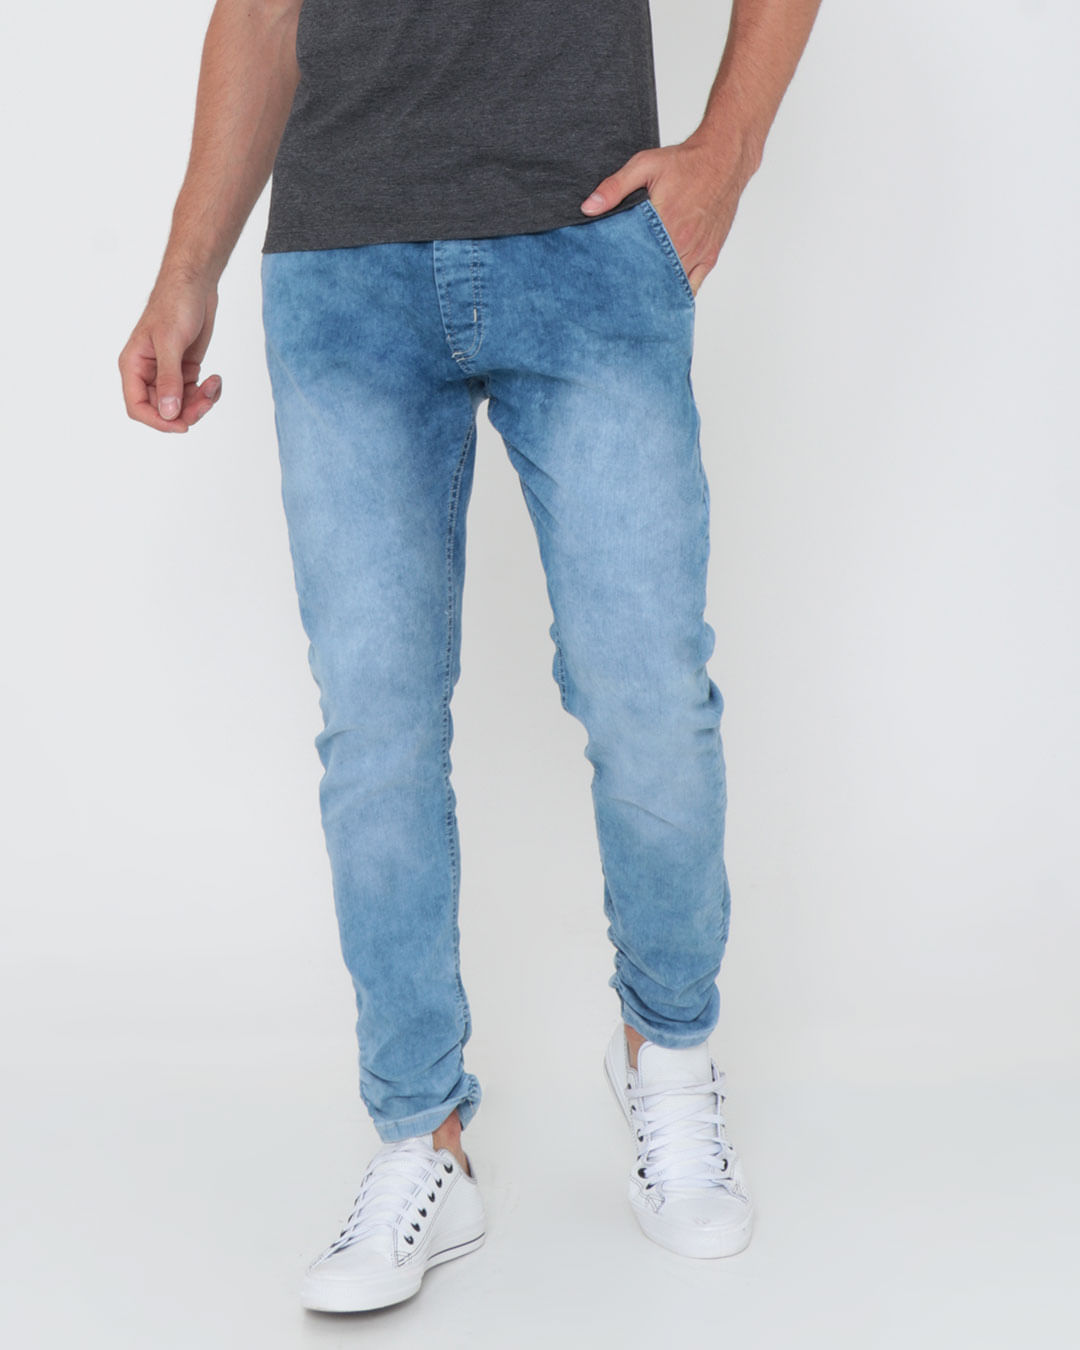 Calca-11032-Jeans-Franz-Perna-Jv---Blue-Jeans-Claro